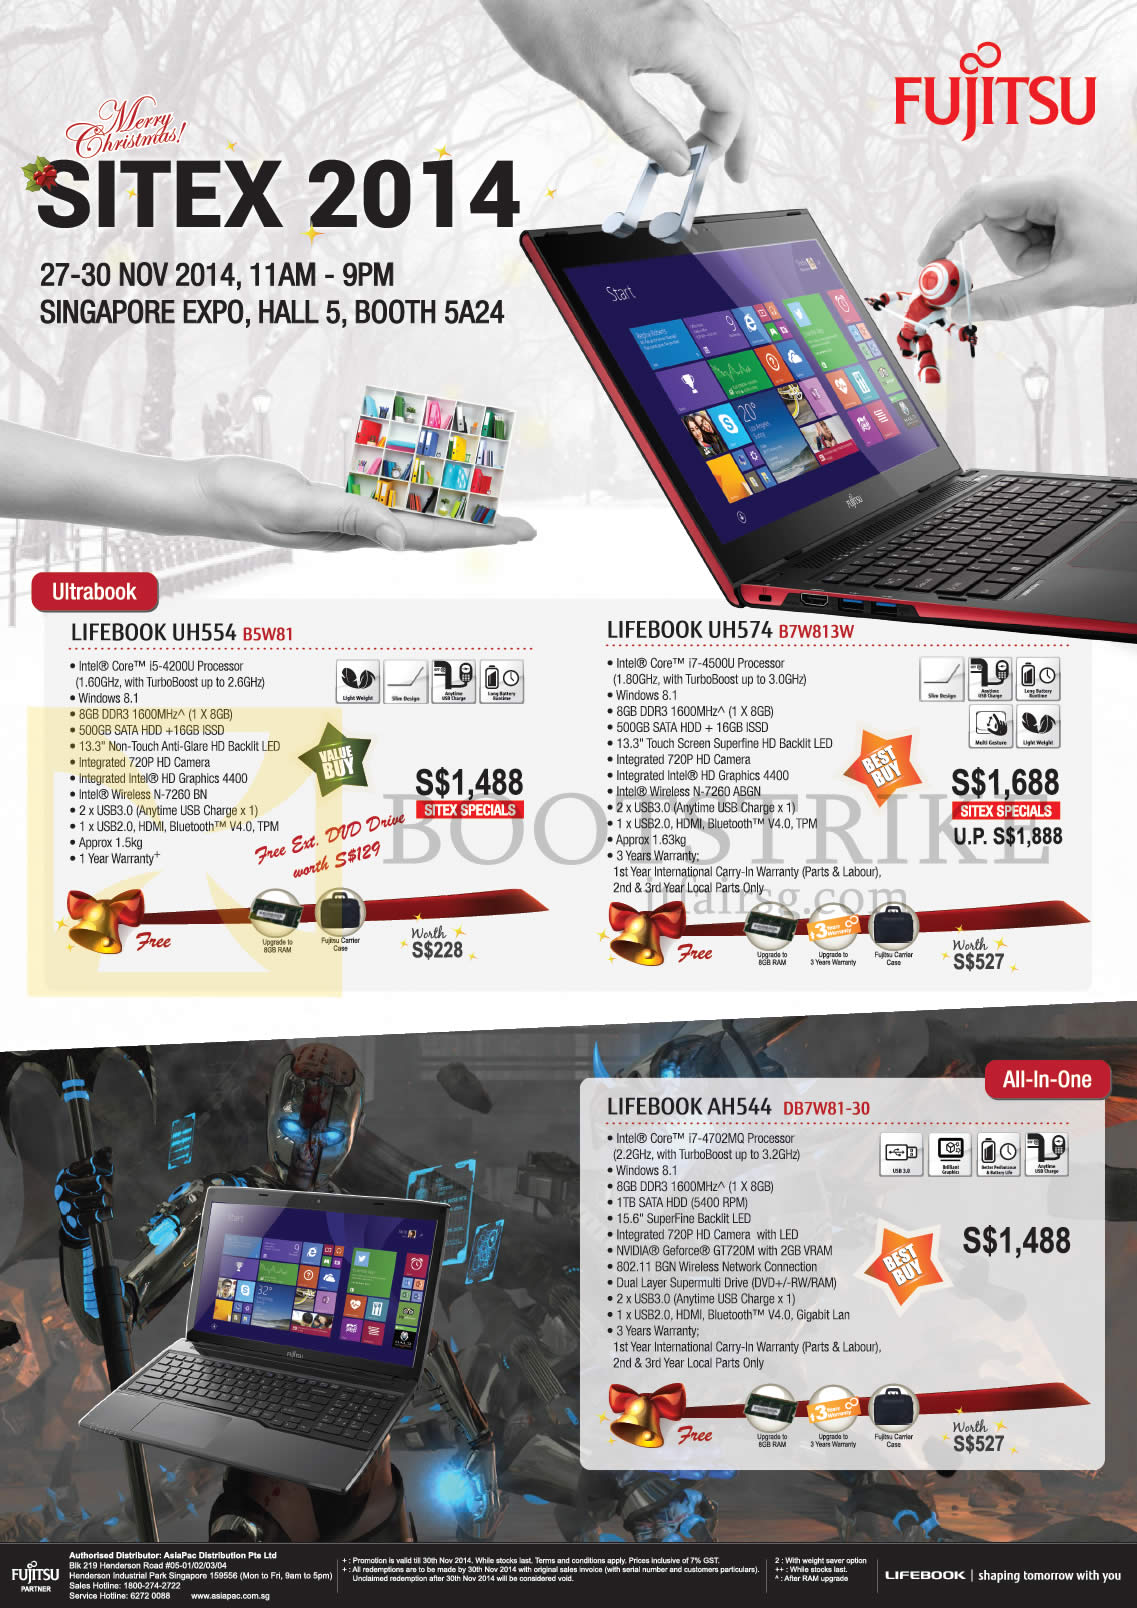 SITEX 2014 price list image brochure of Fujitsu Notebooks Lifebook UH554 BSW81, UH574 B7W813W, AH544 DB7W81-30